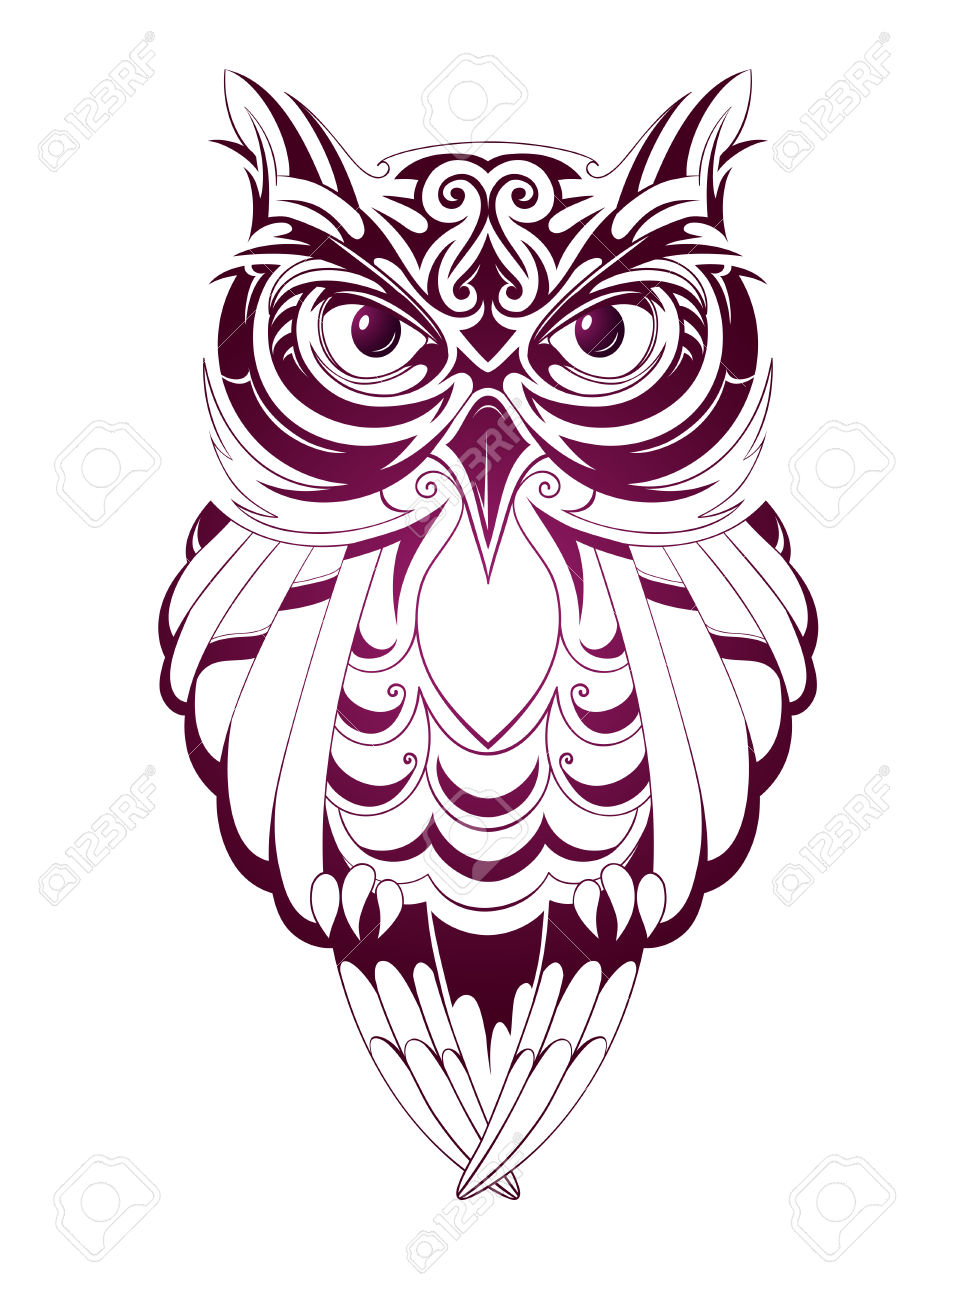 Wonderful Owl Tattoo Design